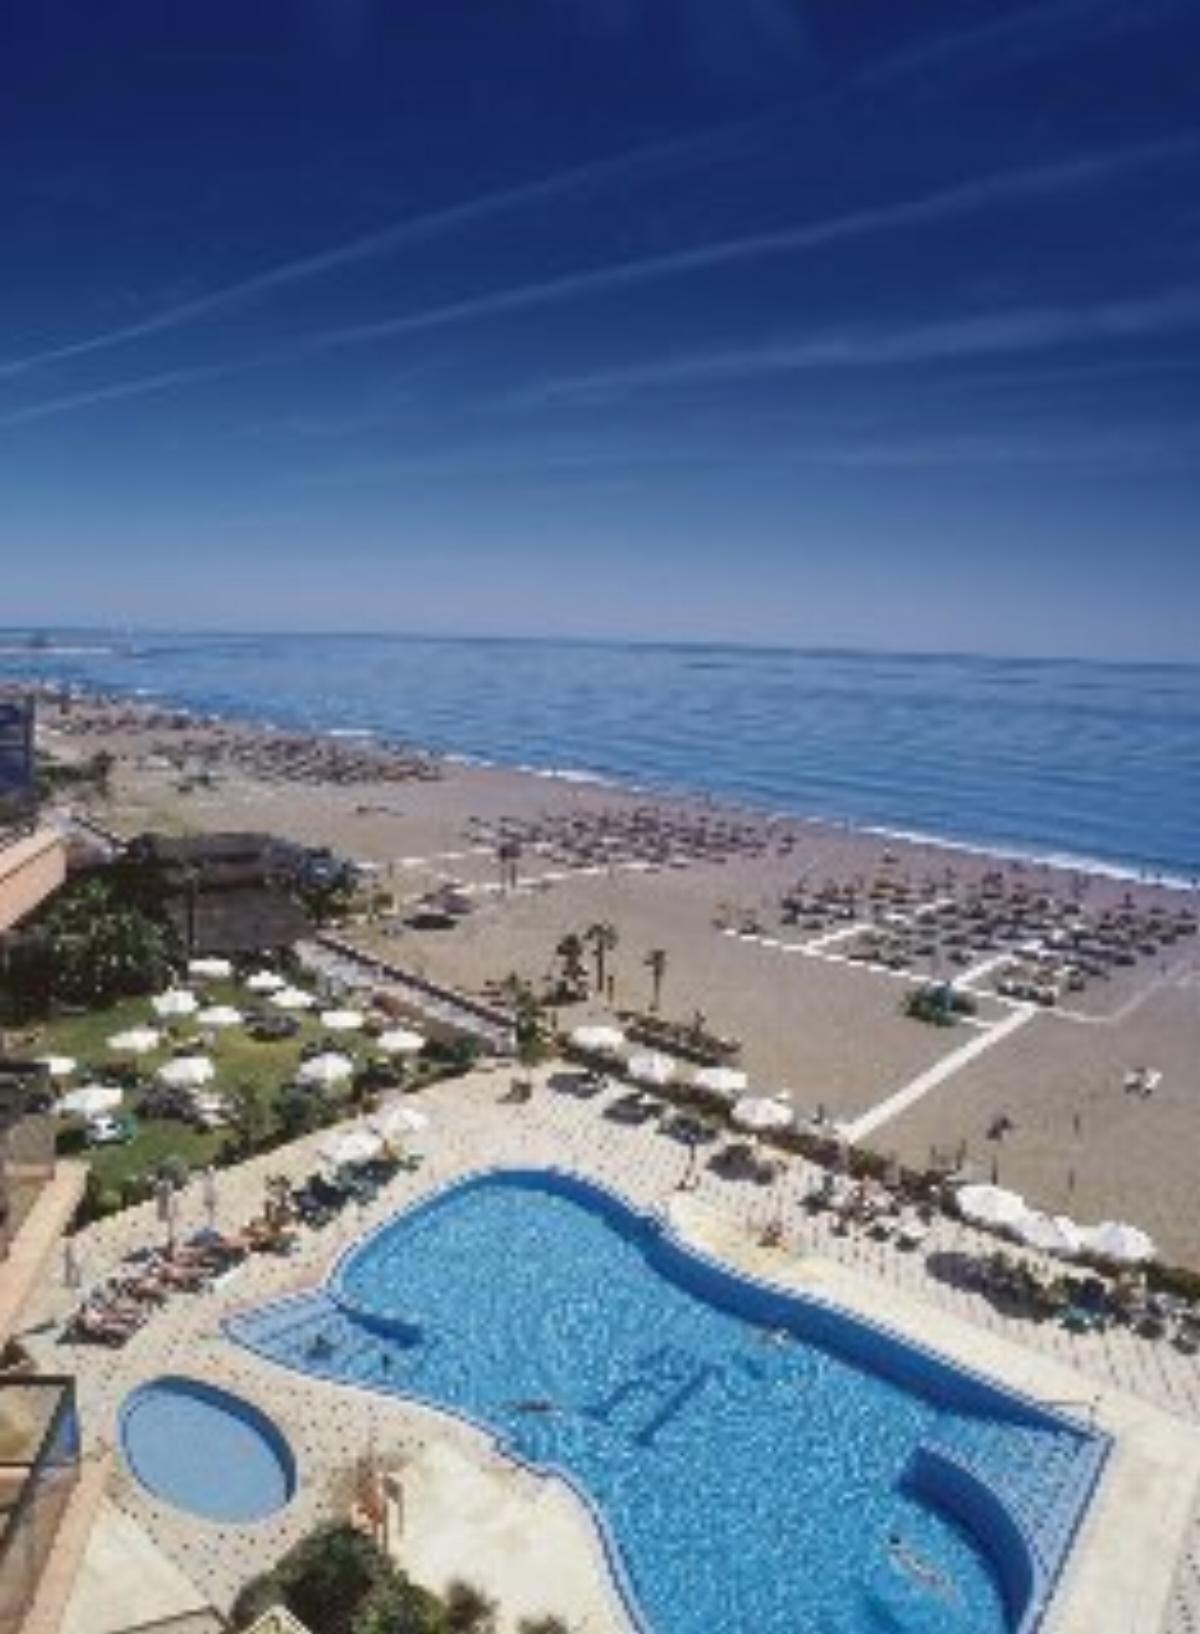 Amaragua Hotel Costa Del Sol Spain